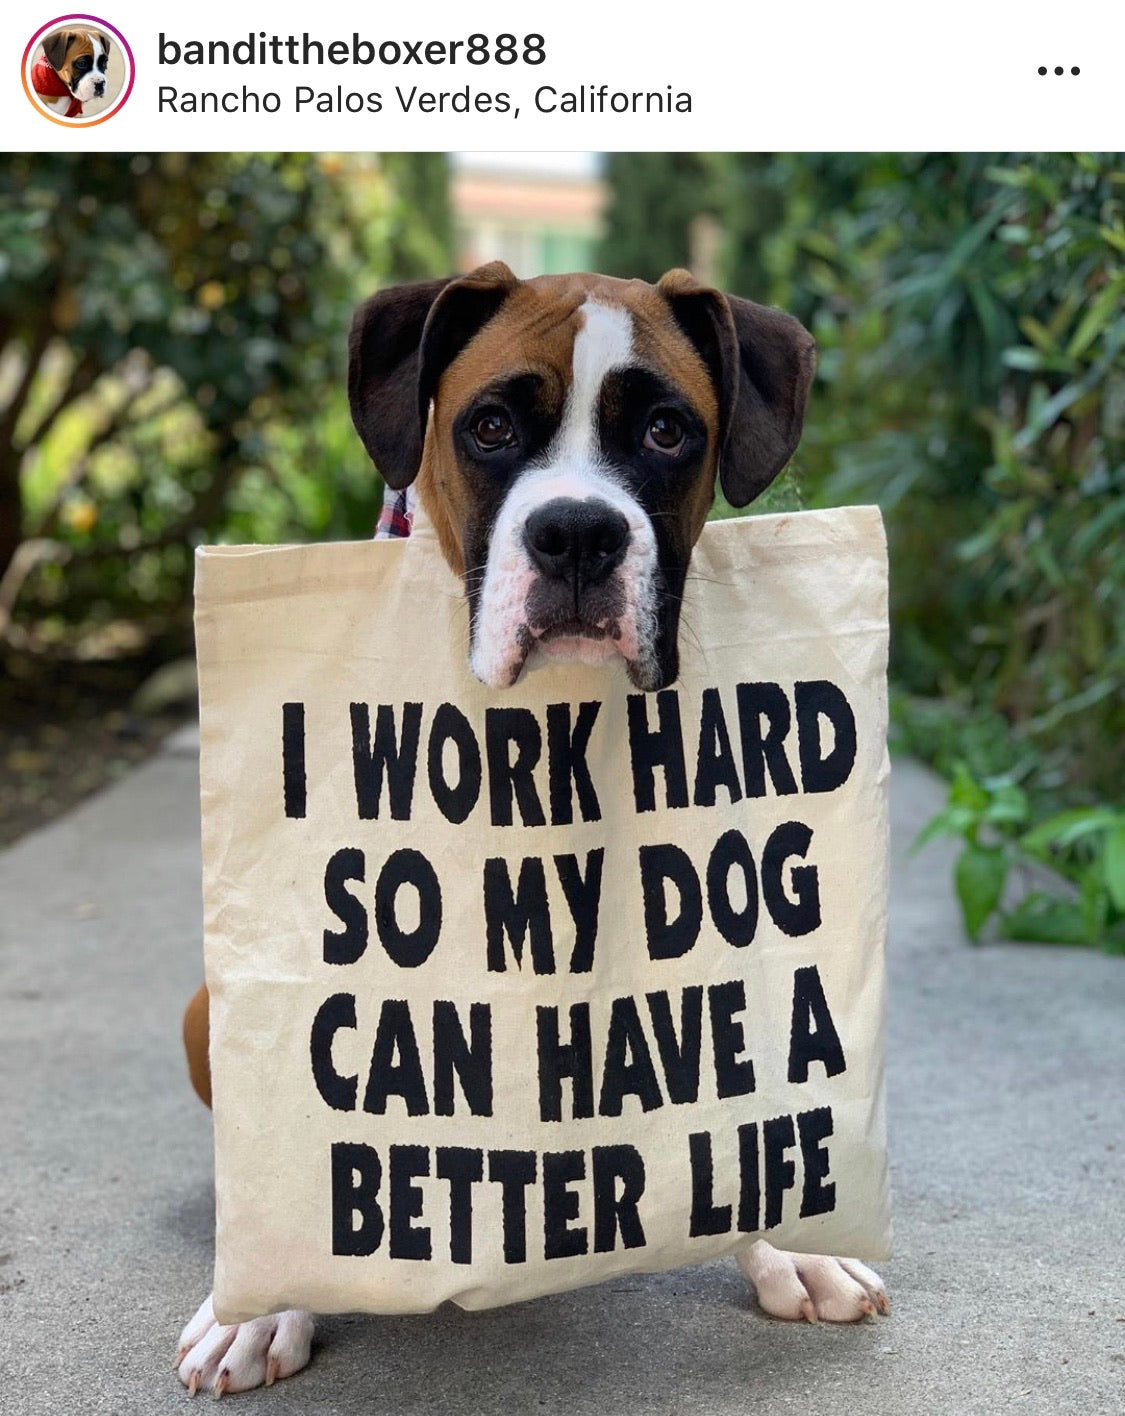 Better Life Tote Bag